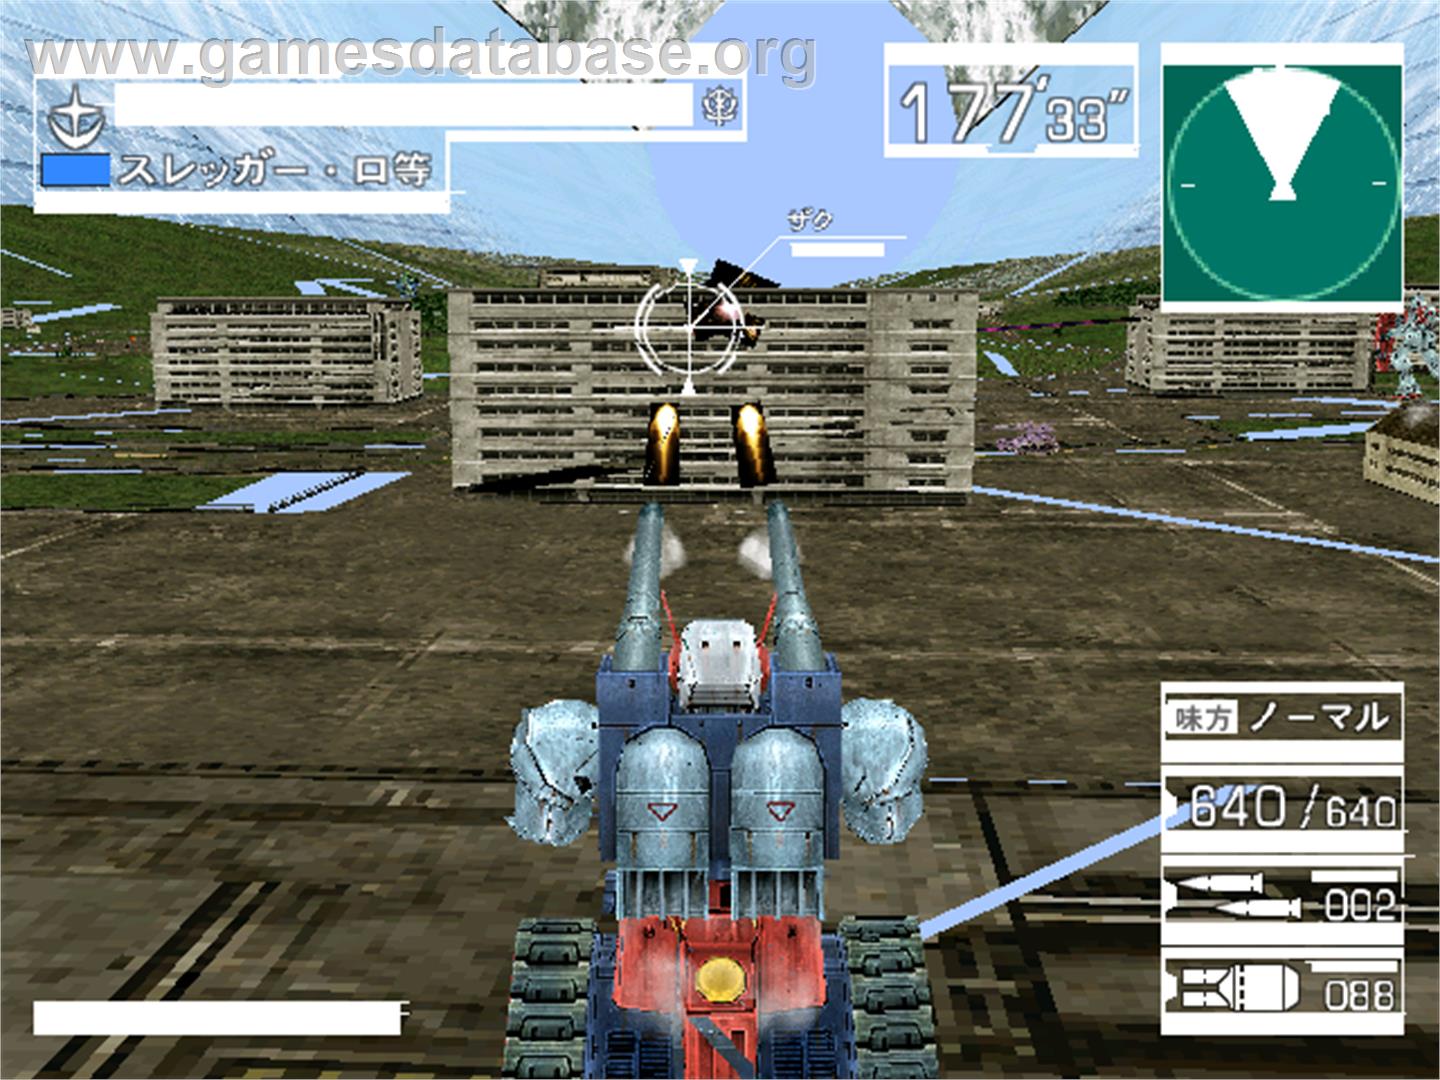 Mobile Suit Gundam: Federation Vs. Zeon DX - Arcade - Artwork - In Game